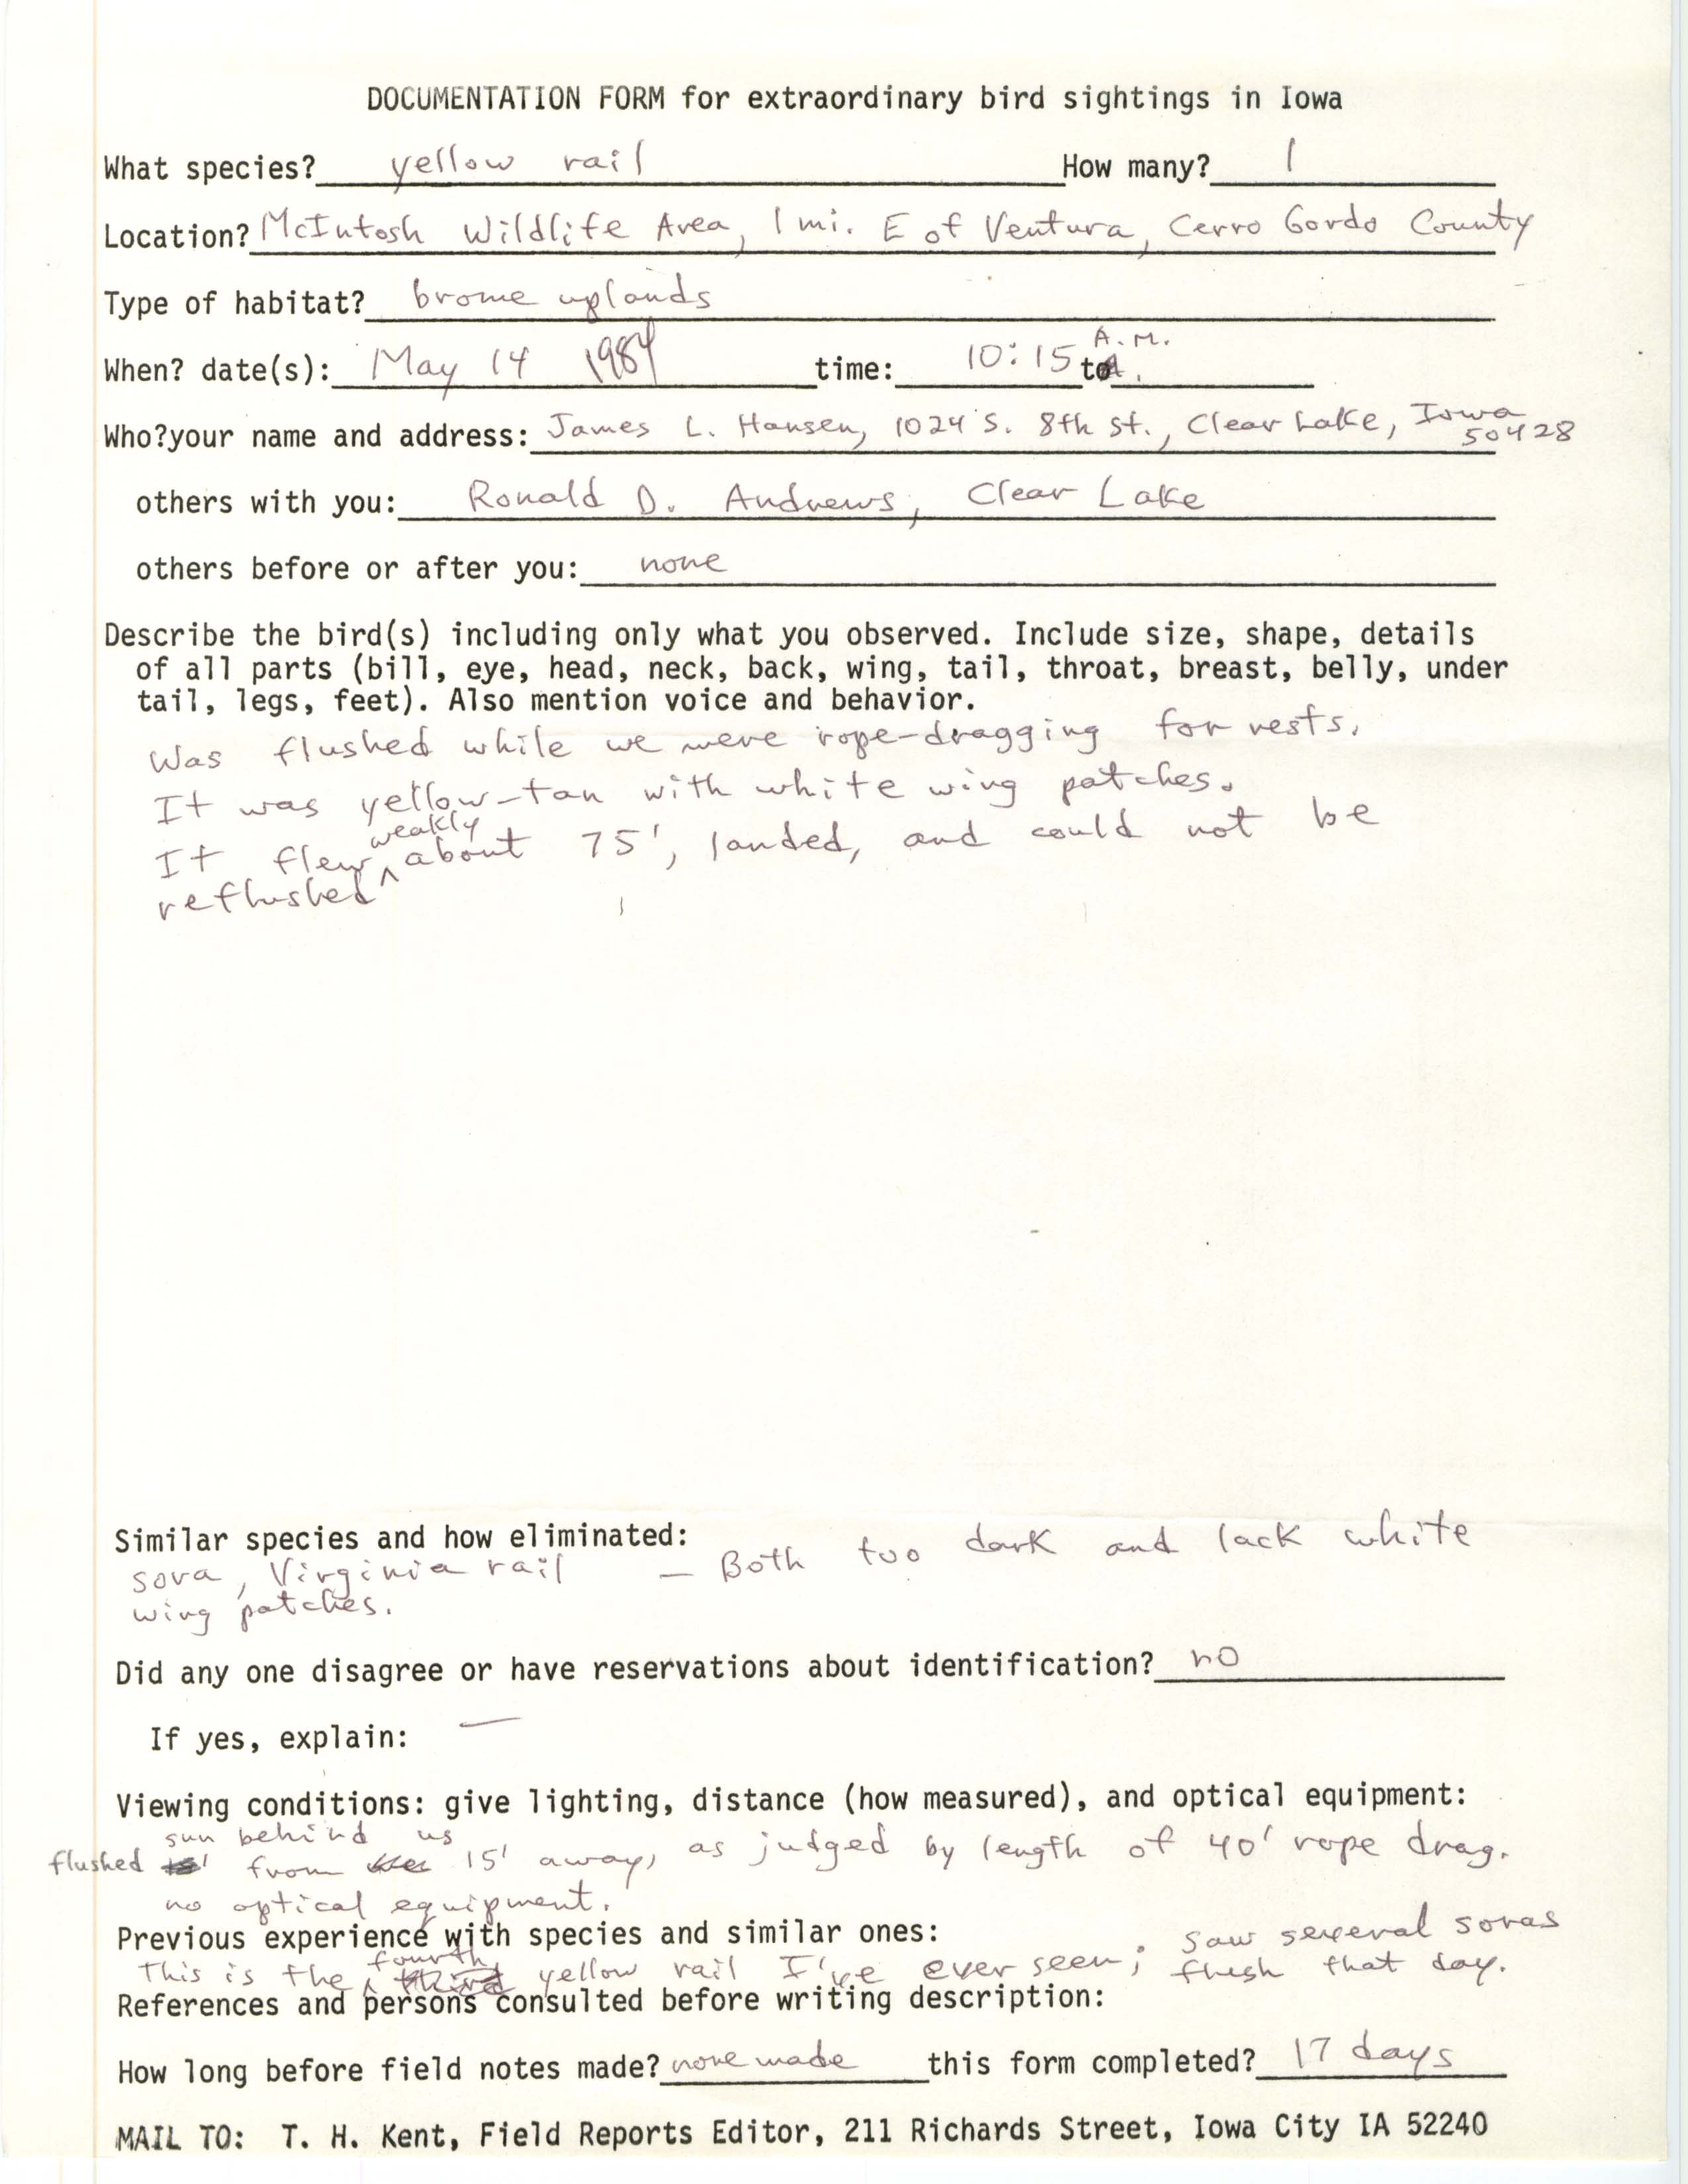 Rare bird documentation form for Yellow Rail at McIntosh Wildlife Area, 1984